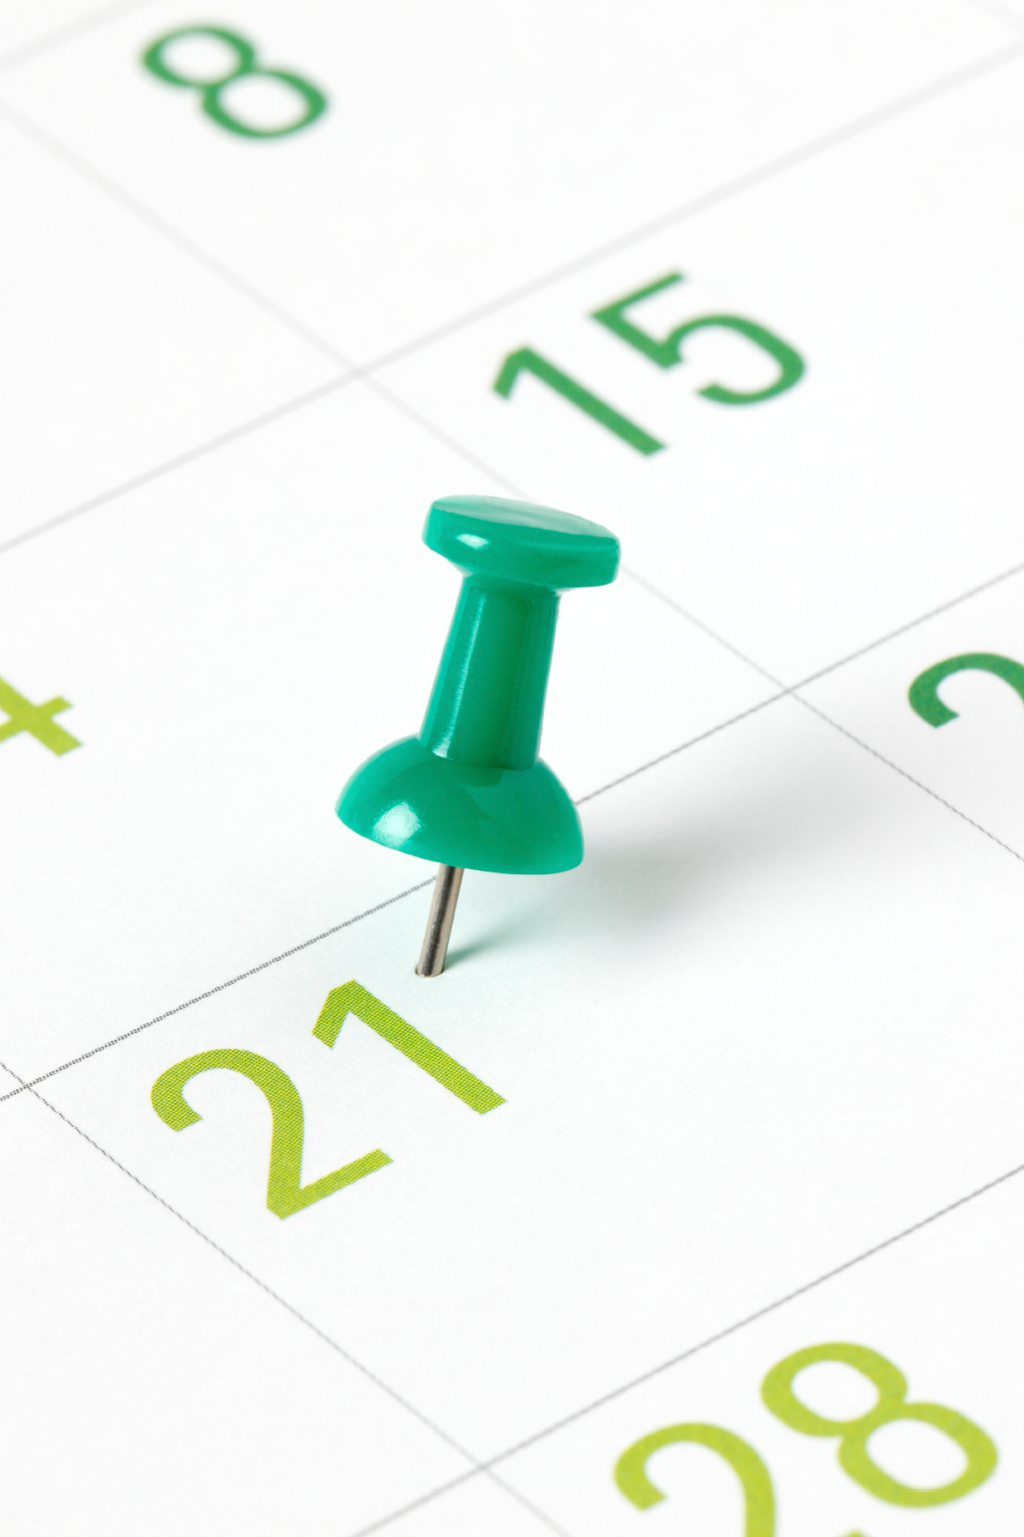 Pushpin sticking into a calendar marking a date